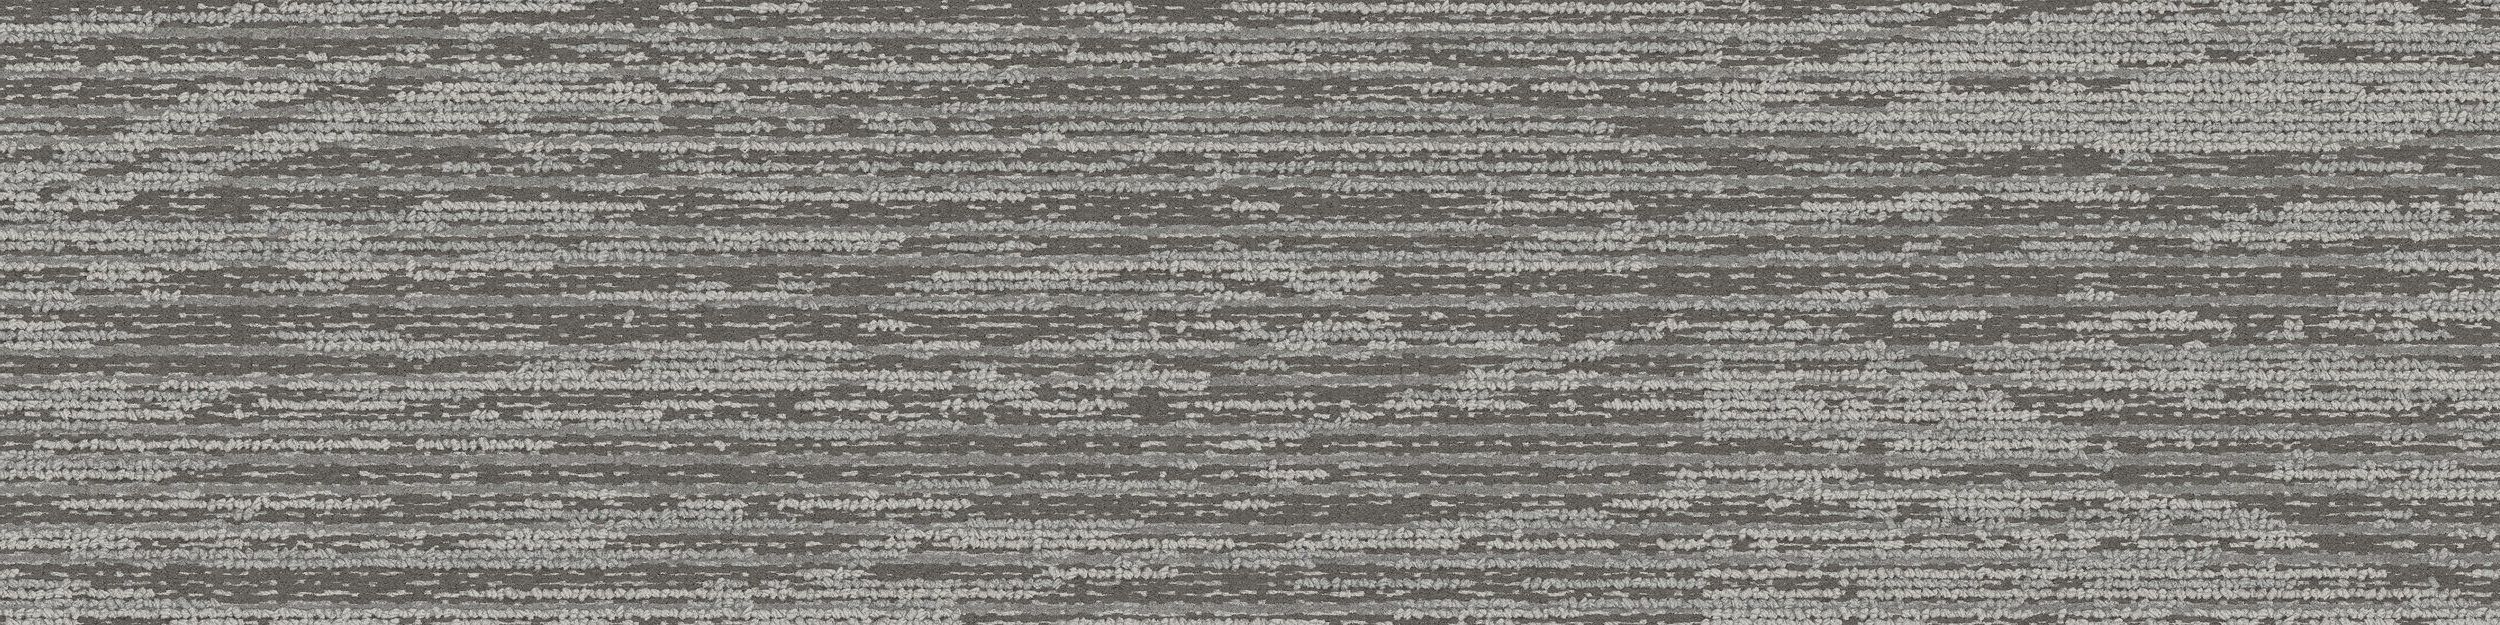 RMS 507 Carpet Tile In Taffy imagen número 2